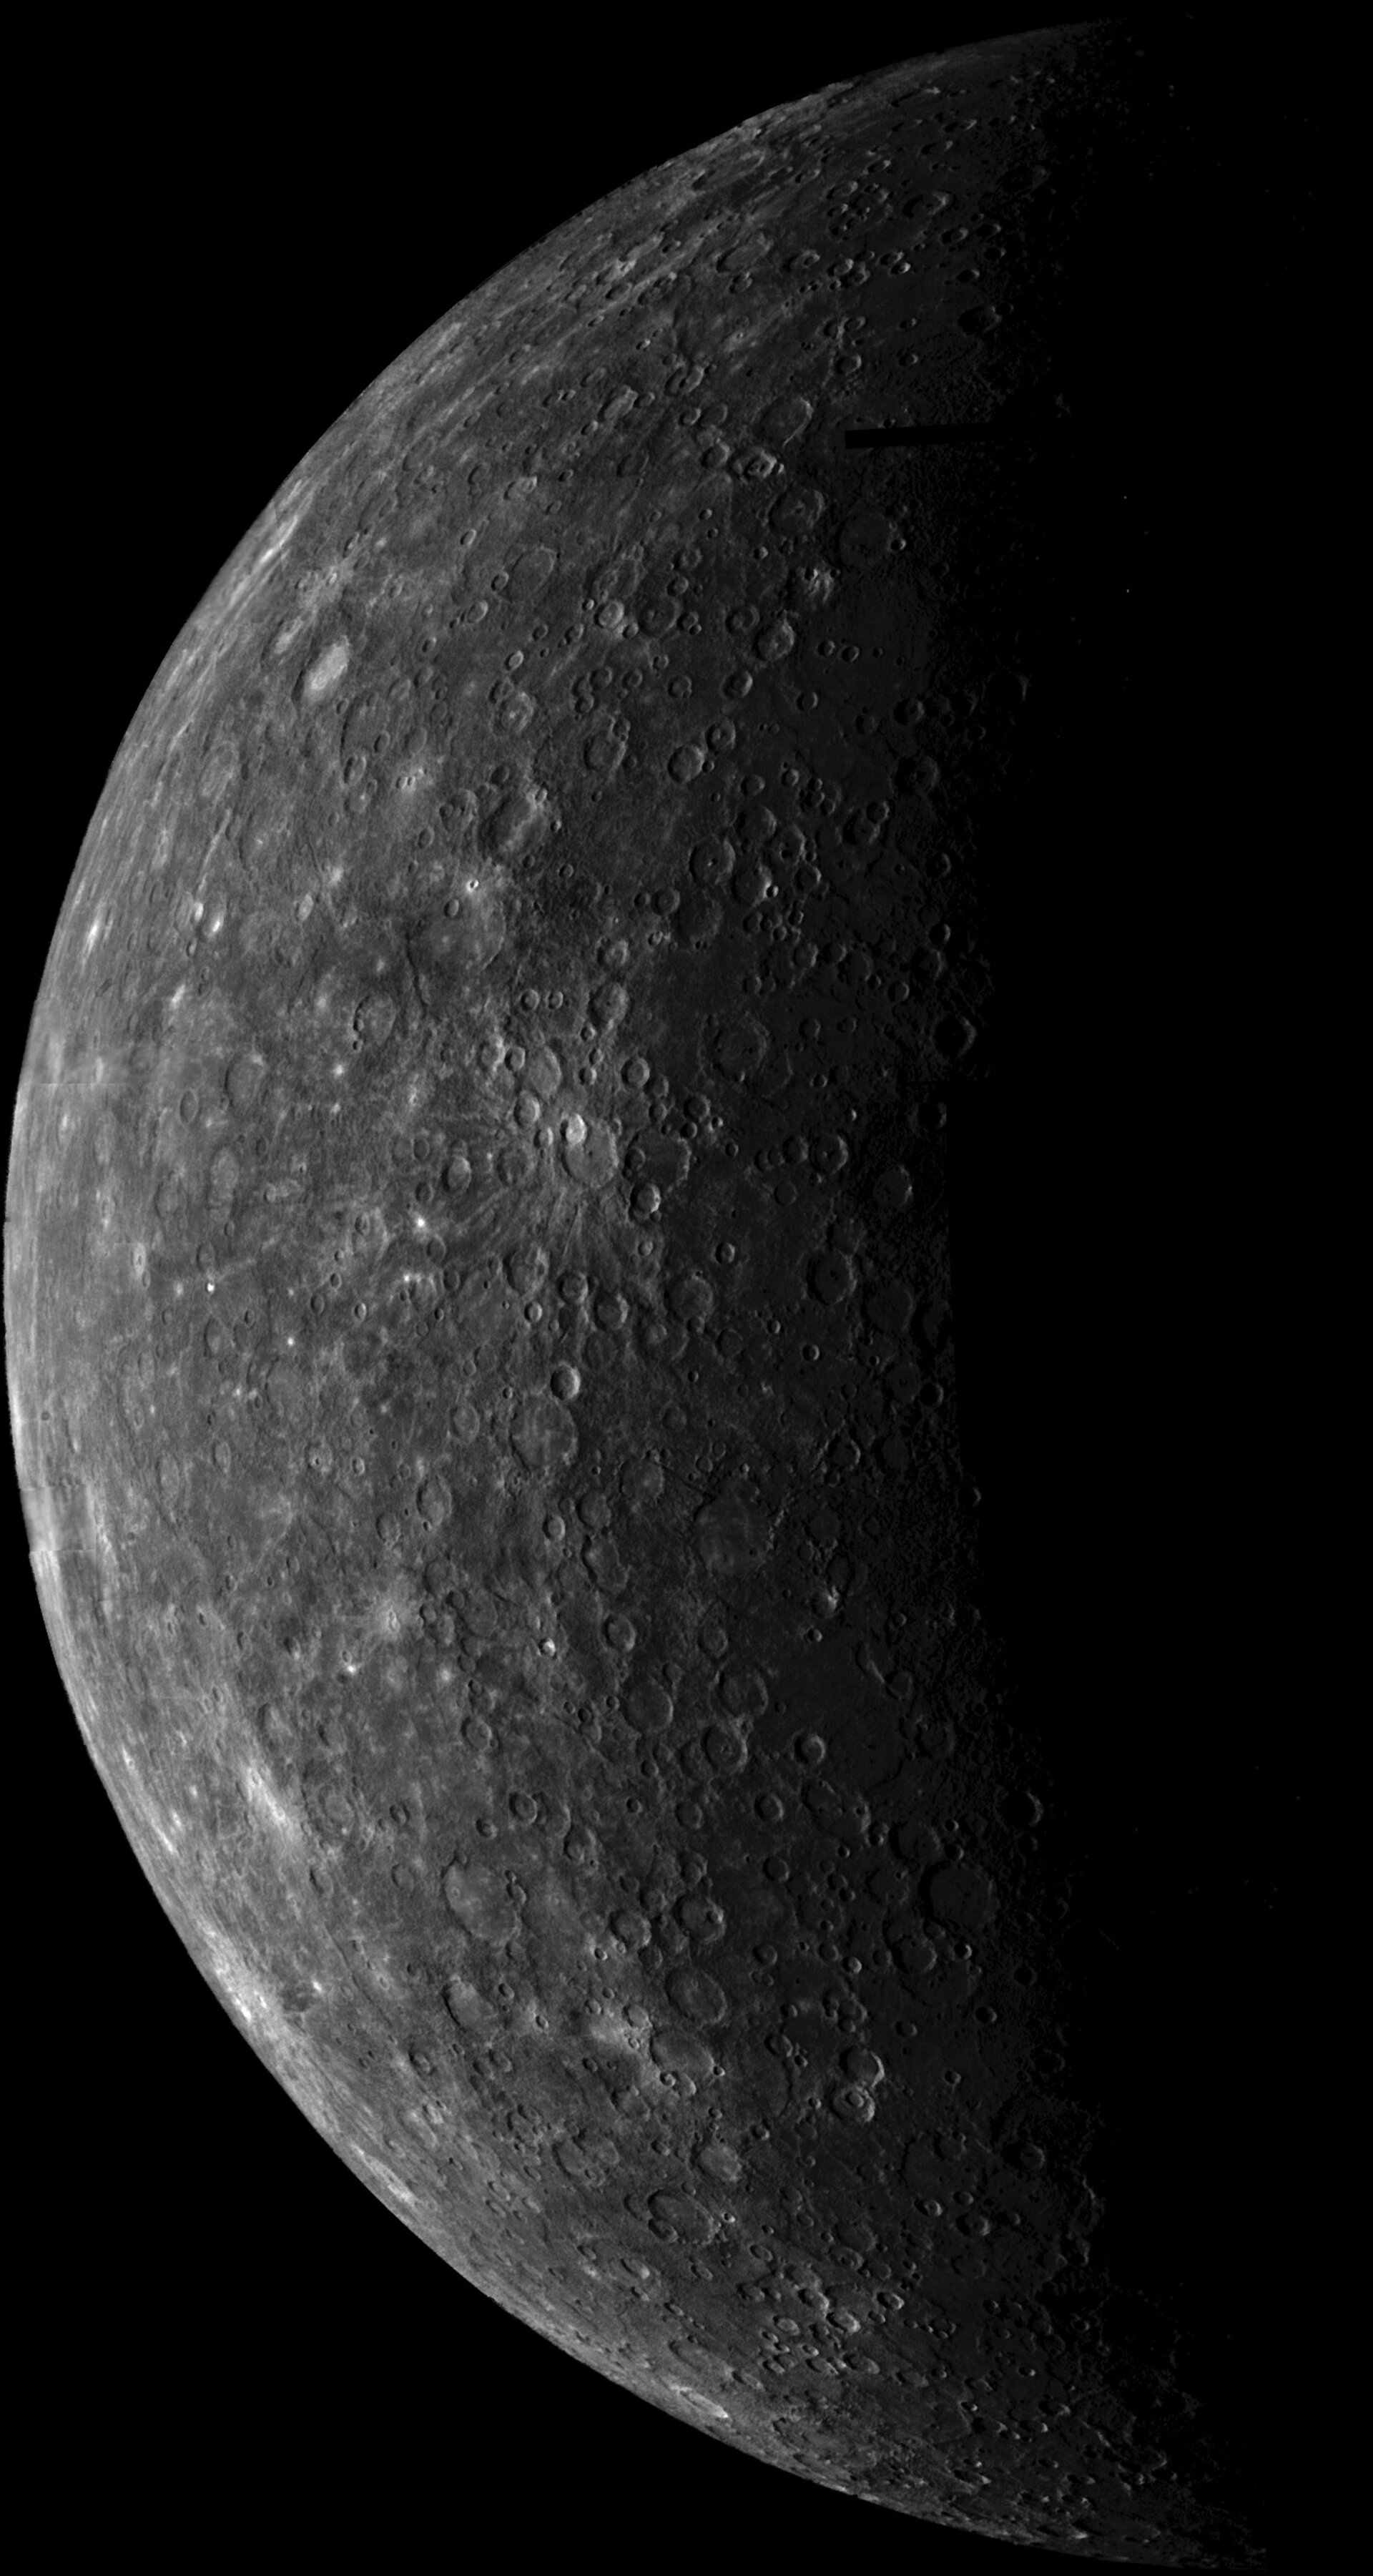 View of planet Mercury